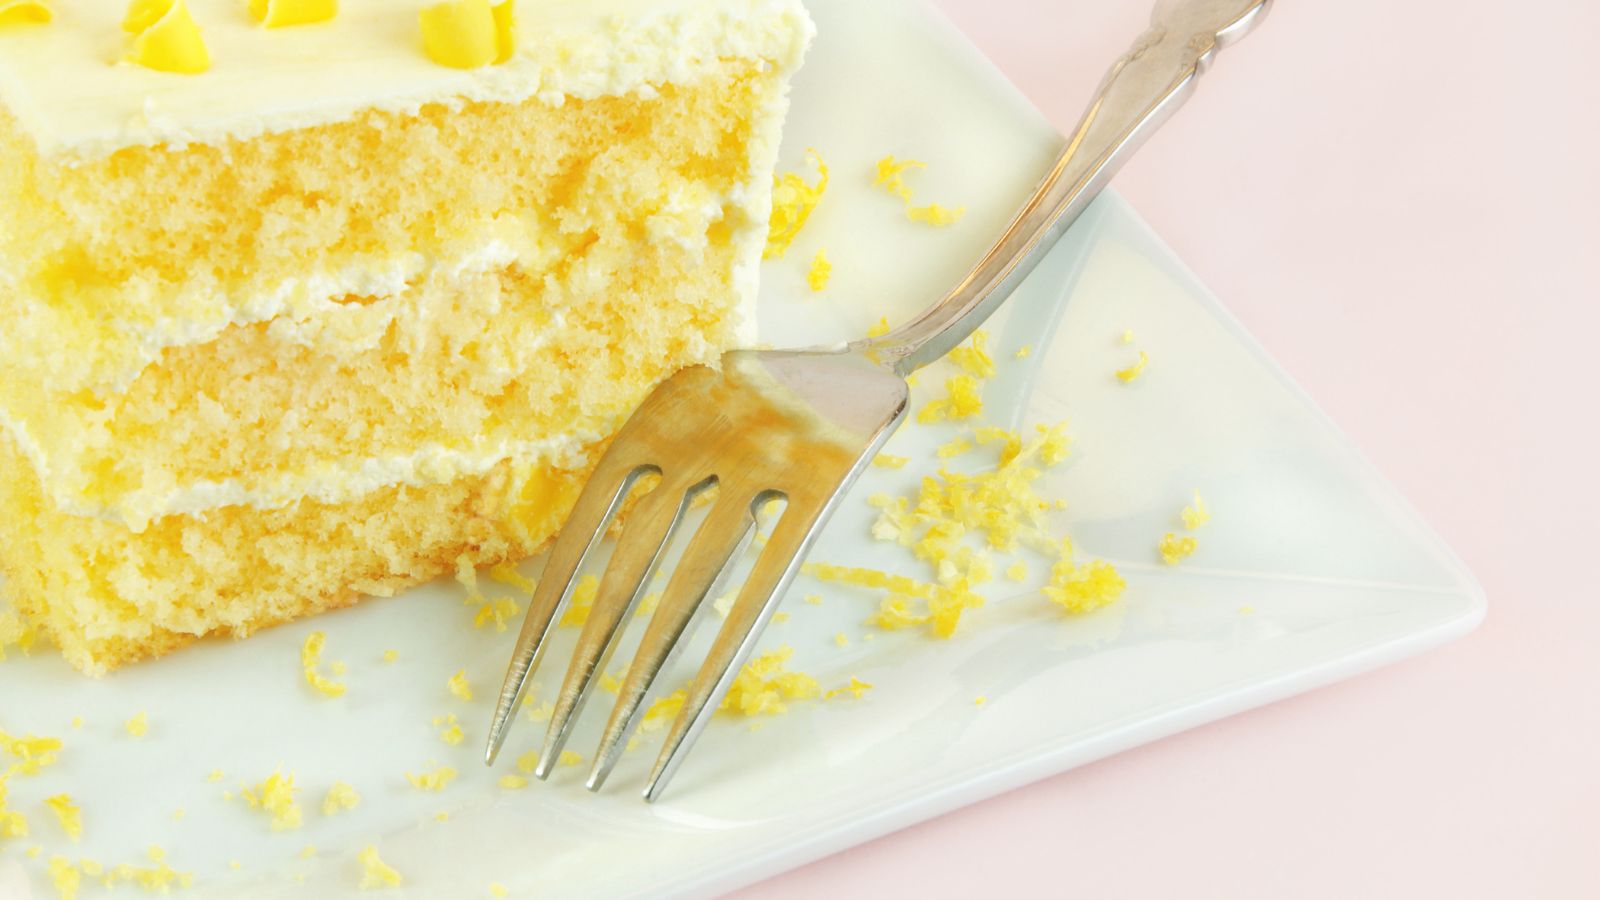 lemony lemon cake recipe. Image of a lemony lemon cake with a fork on a pink background